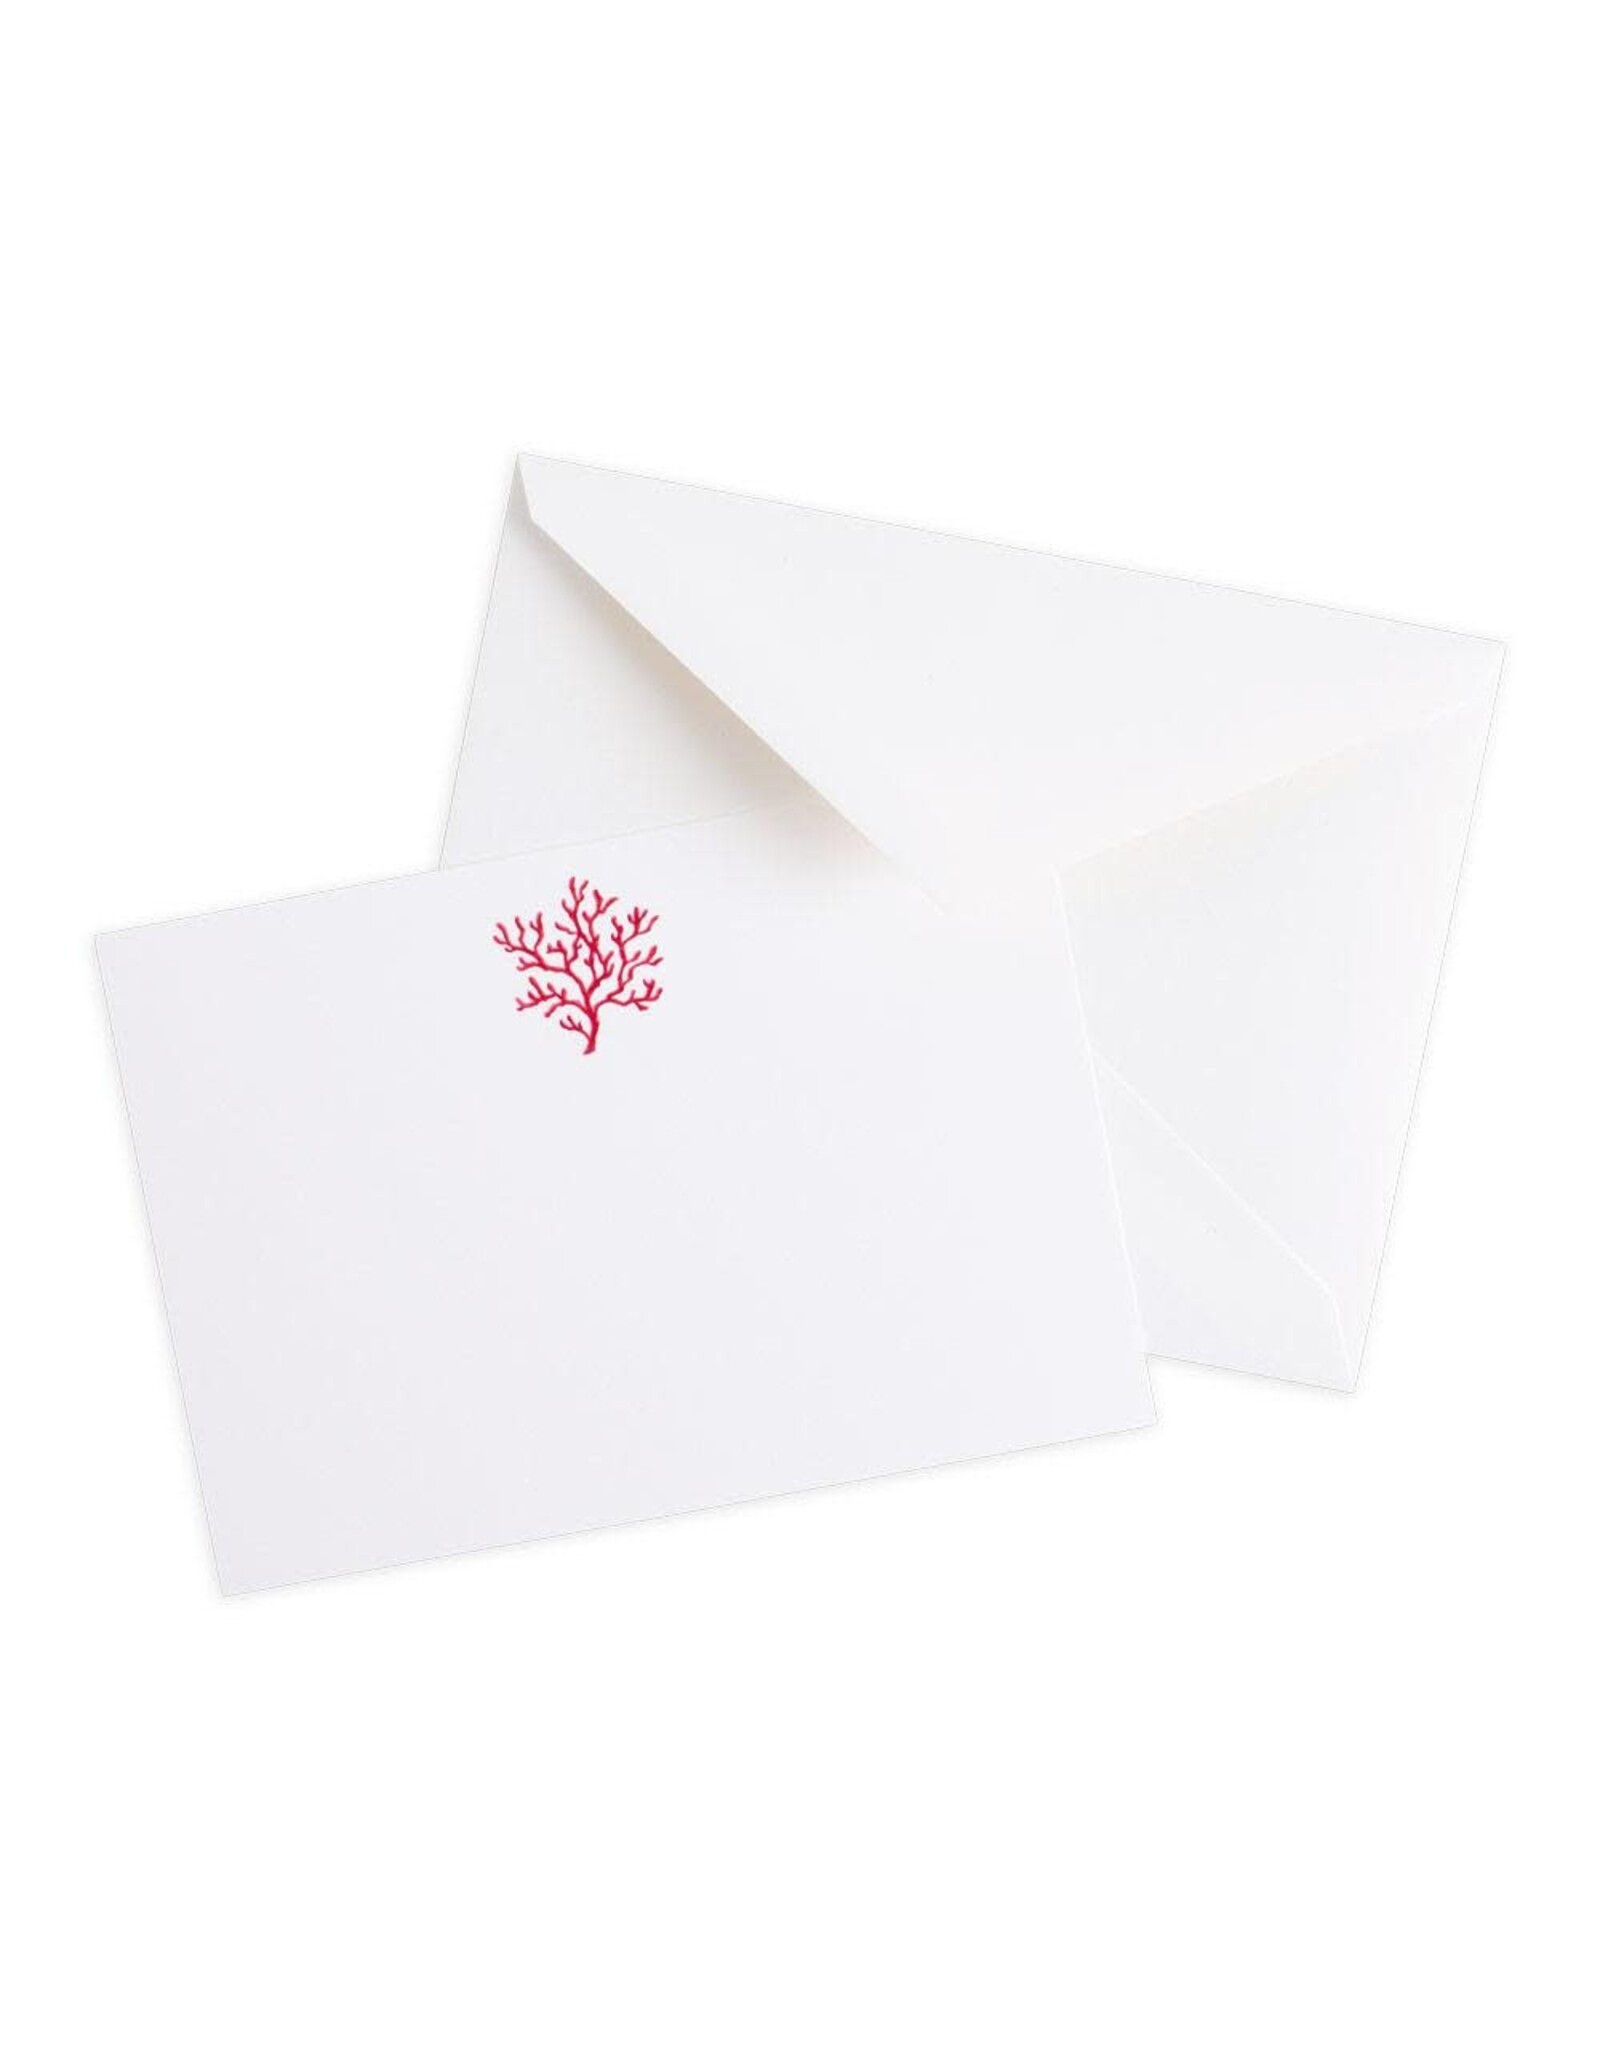 Caspari Correspondence Cards Boxed Set of 12 - Coral